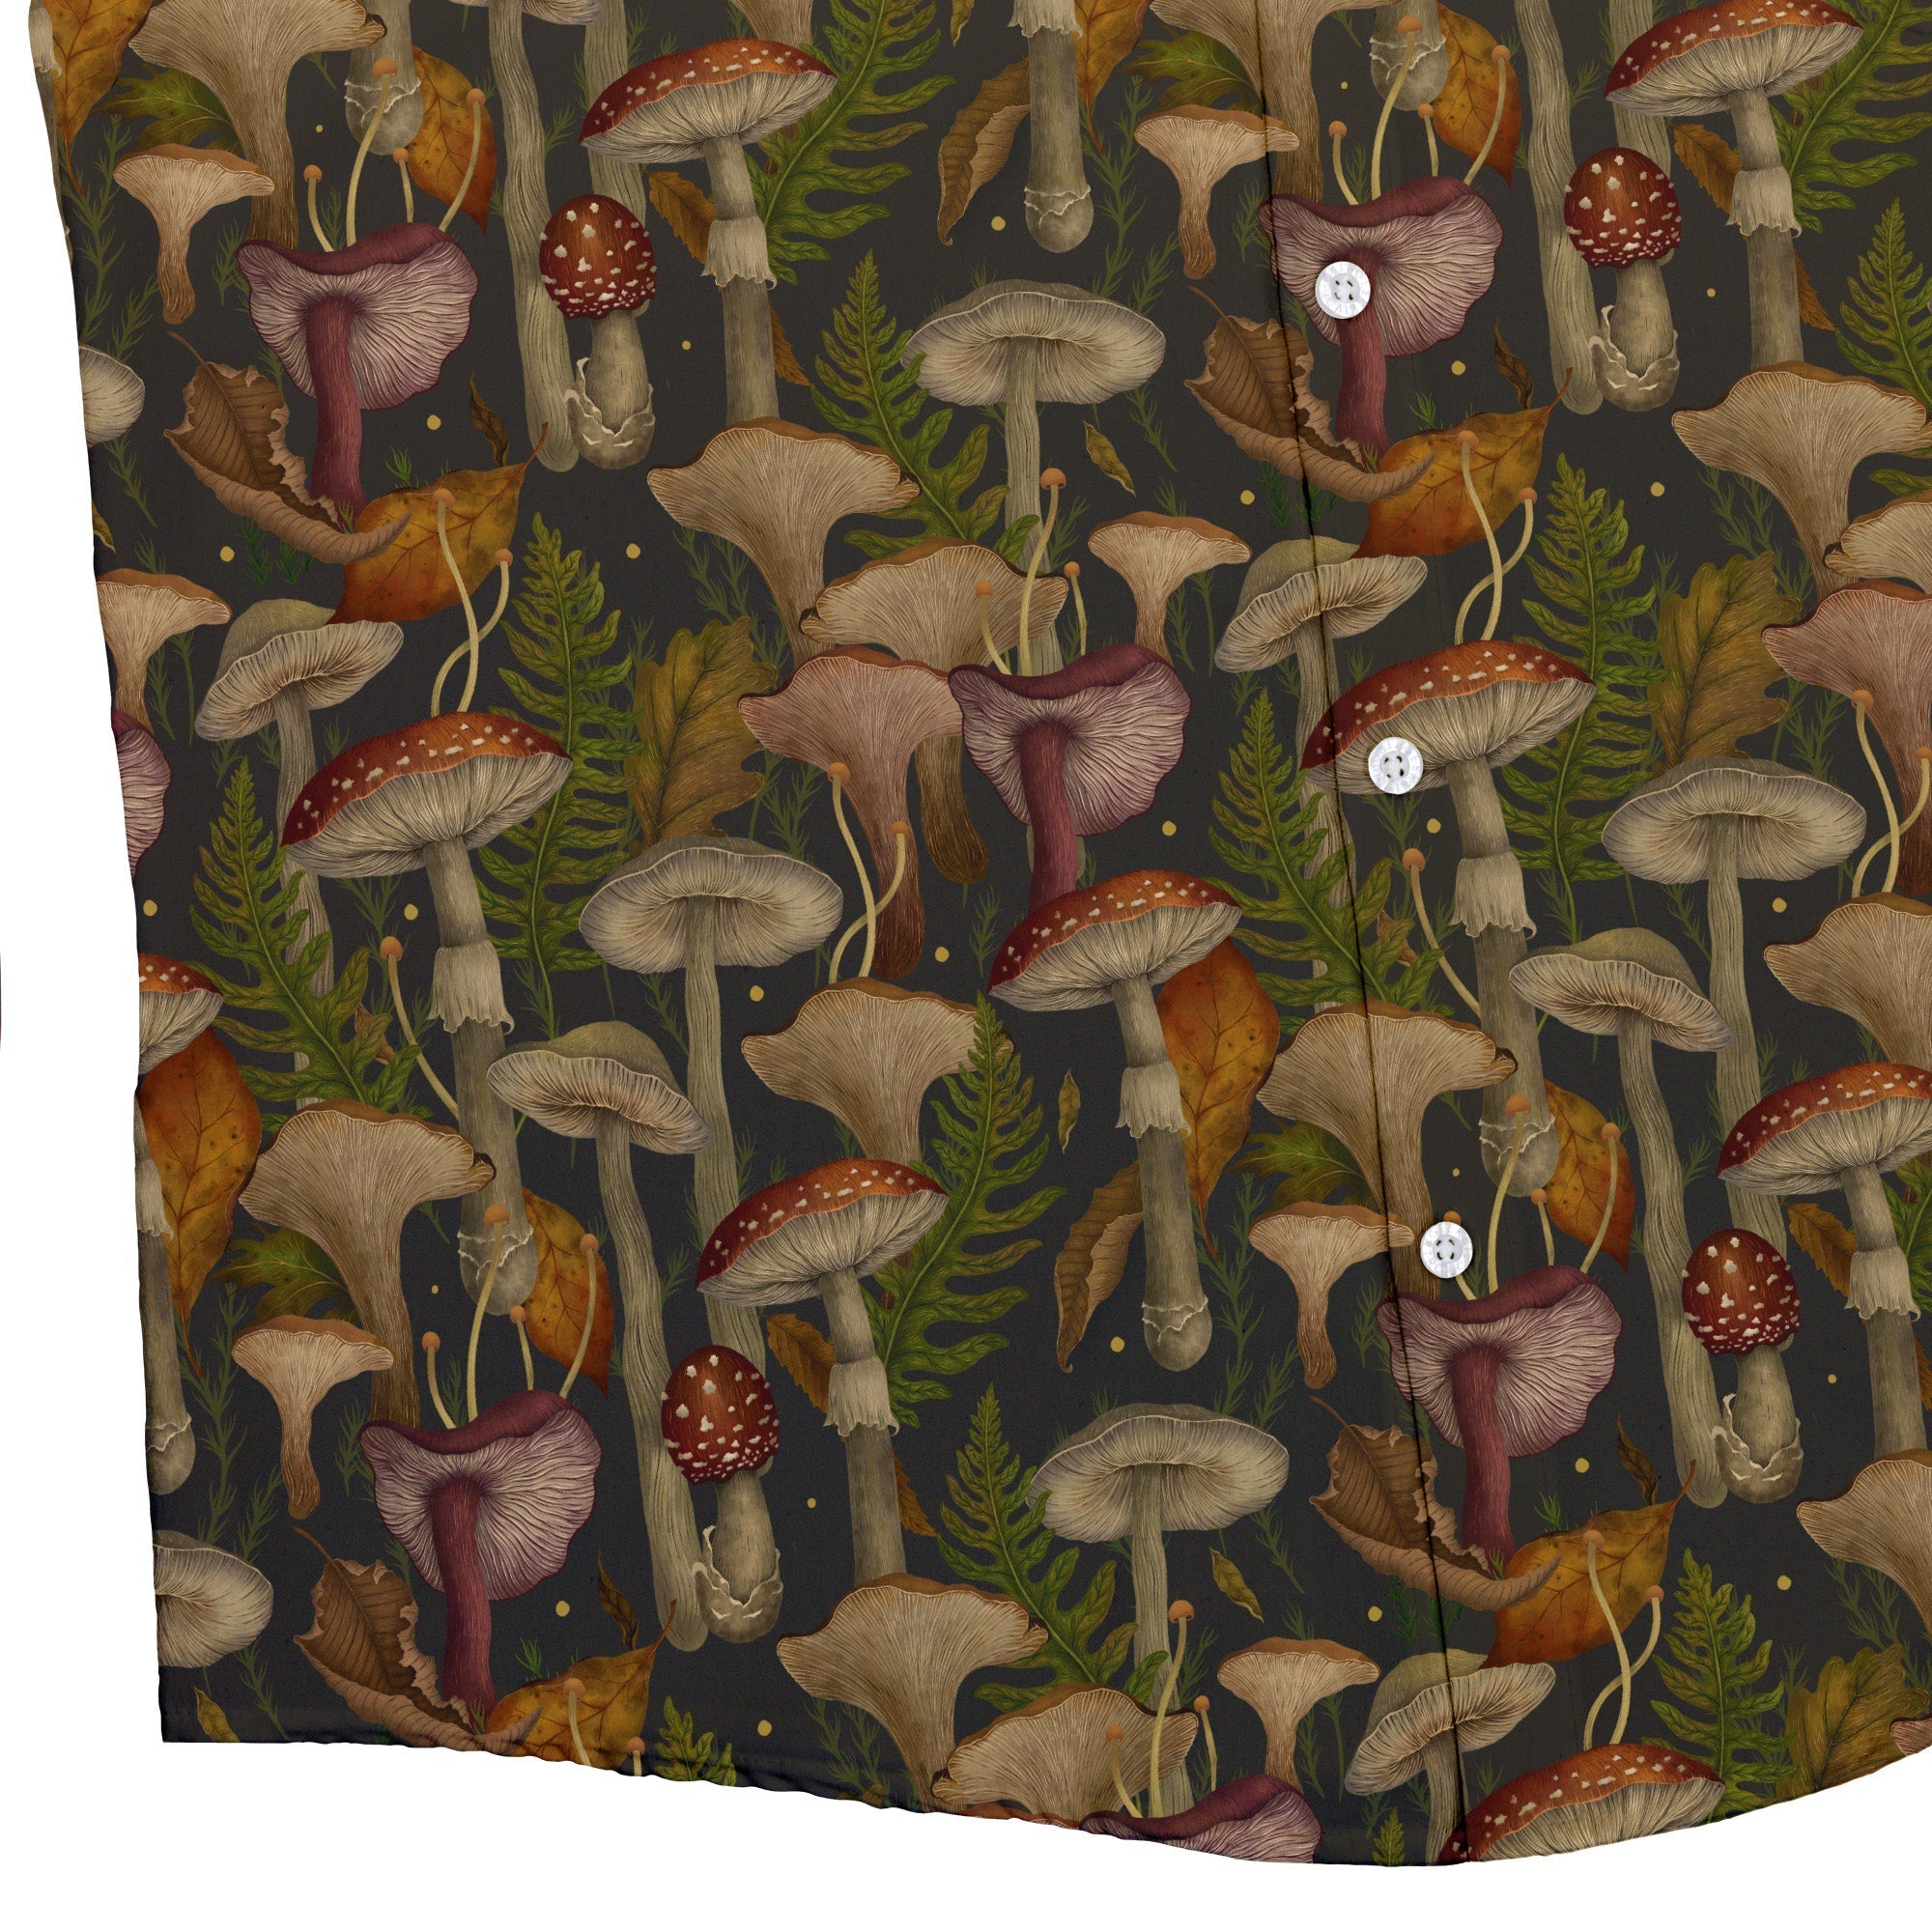 Episodic Autumn Mushroom Collage Button Up Shirt - XS - Hawaiian Shirt - No Pocket -